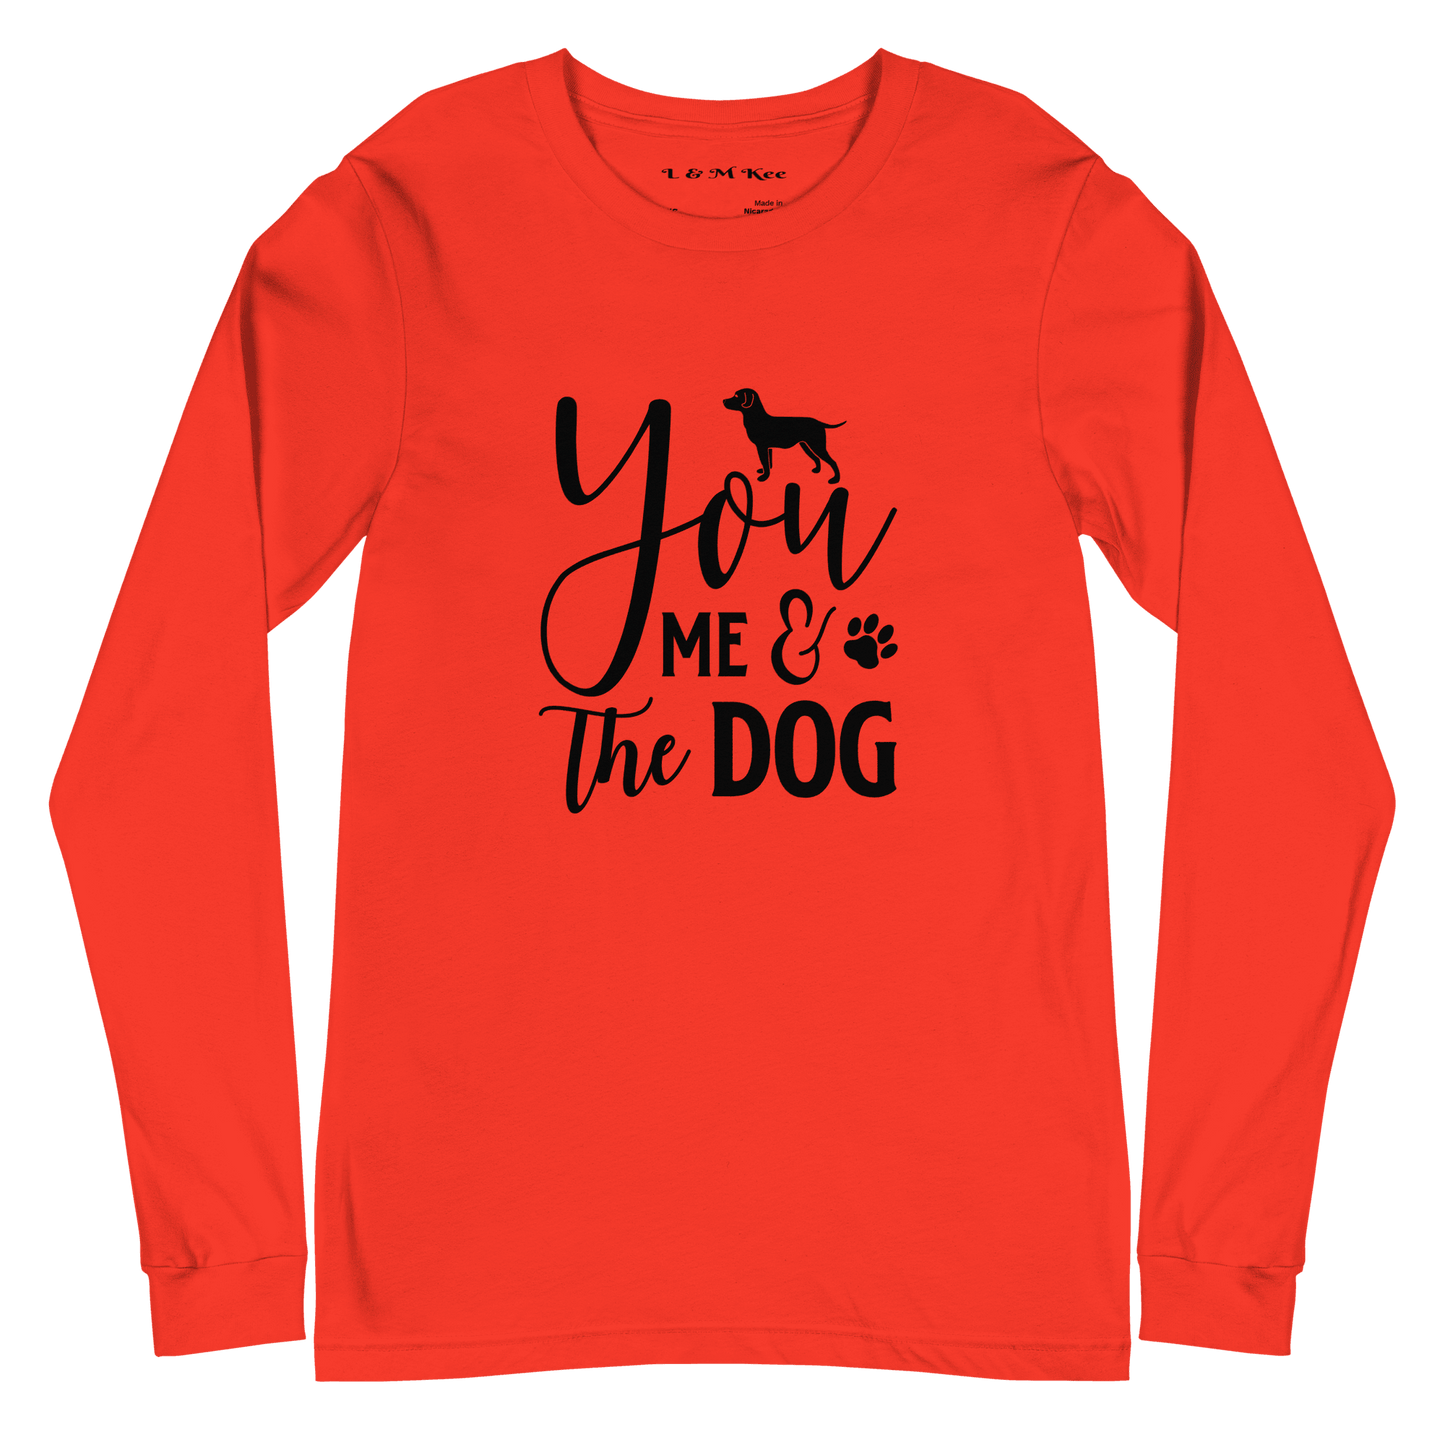 You Me & the Dog Unisex Long Sleeve Tee - L & M Kee, LLC